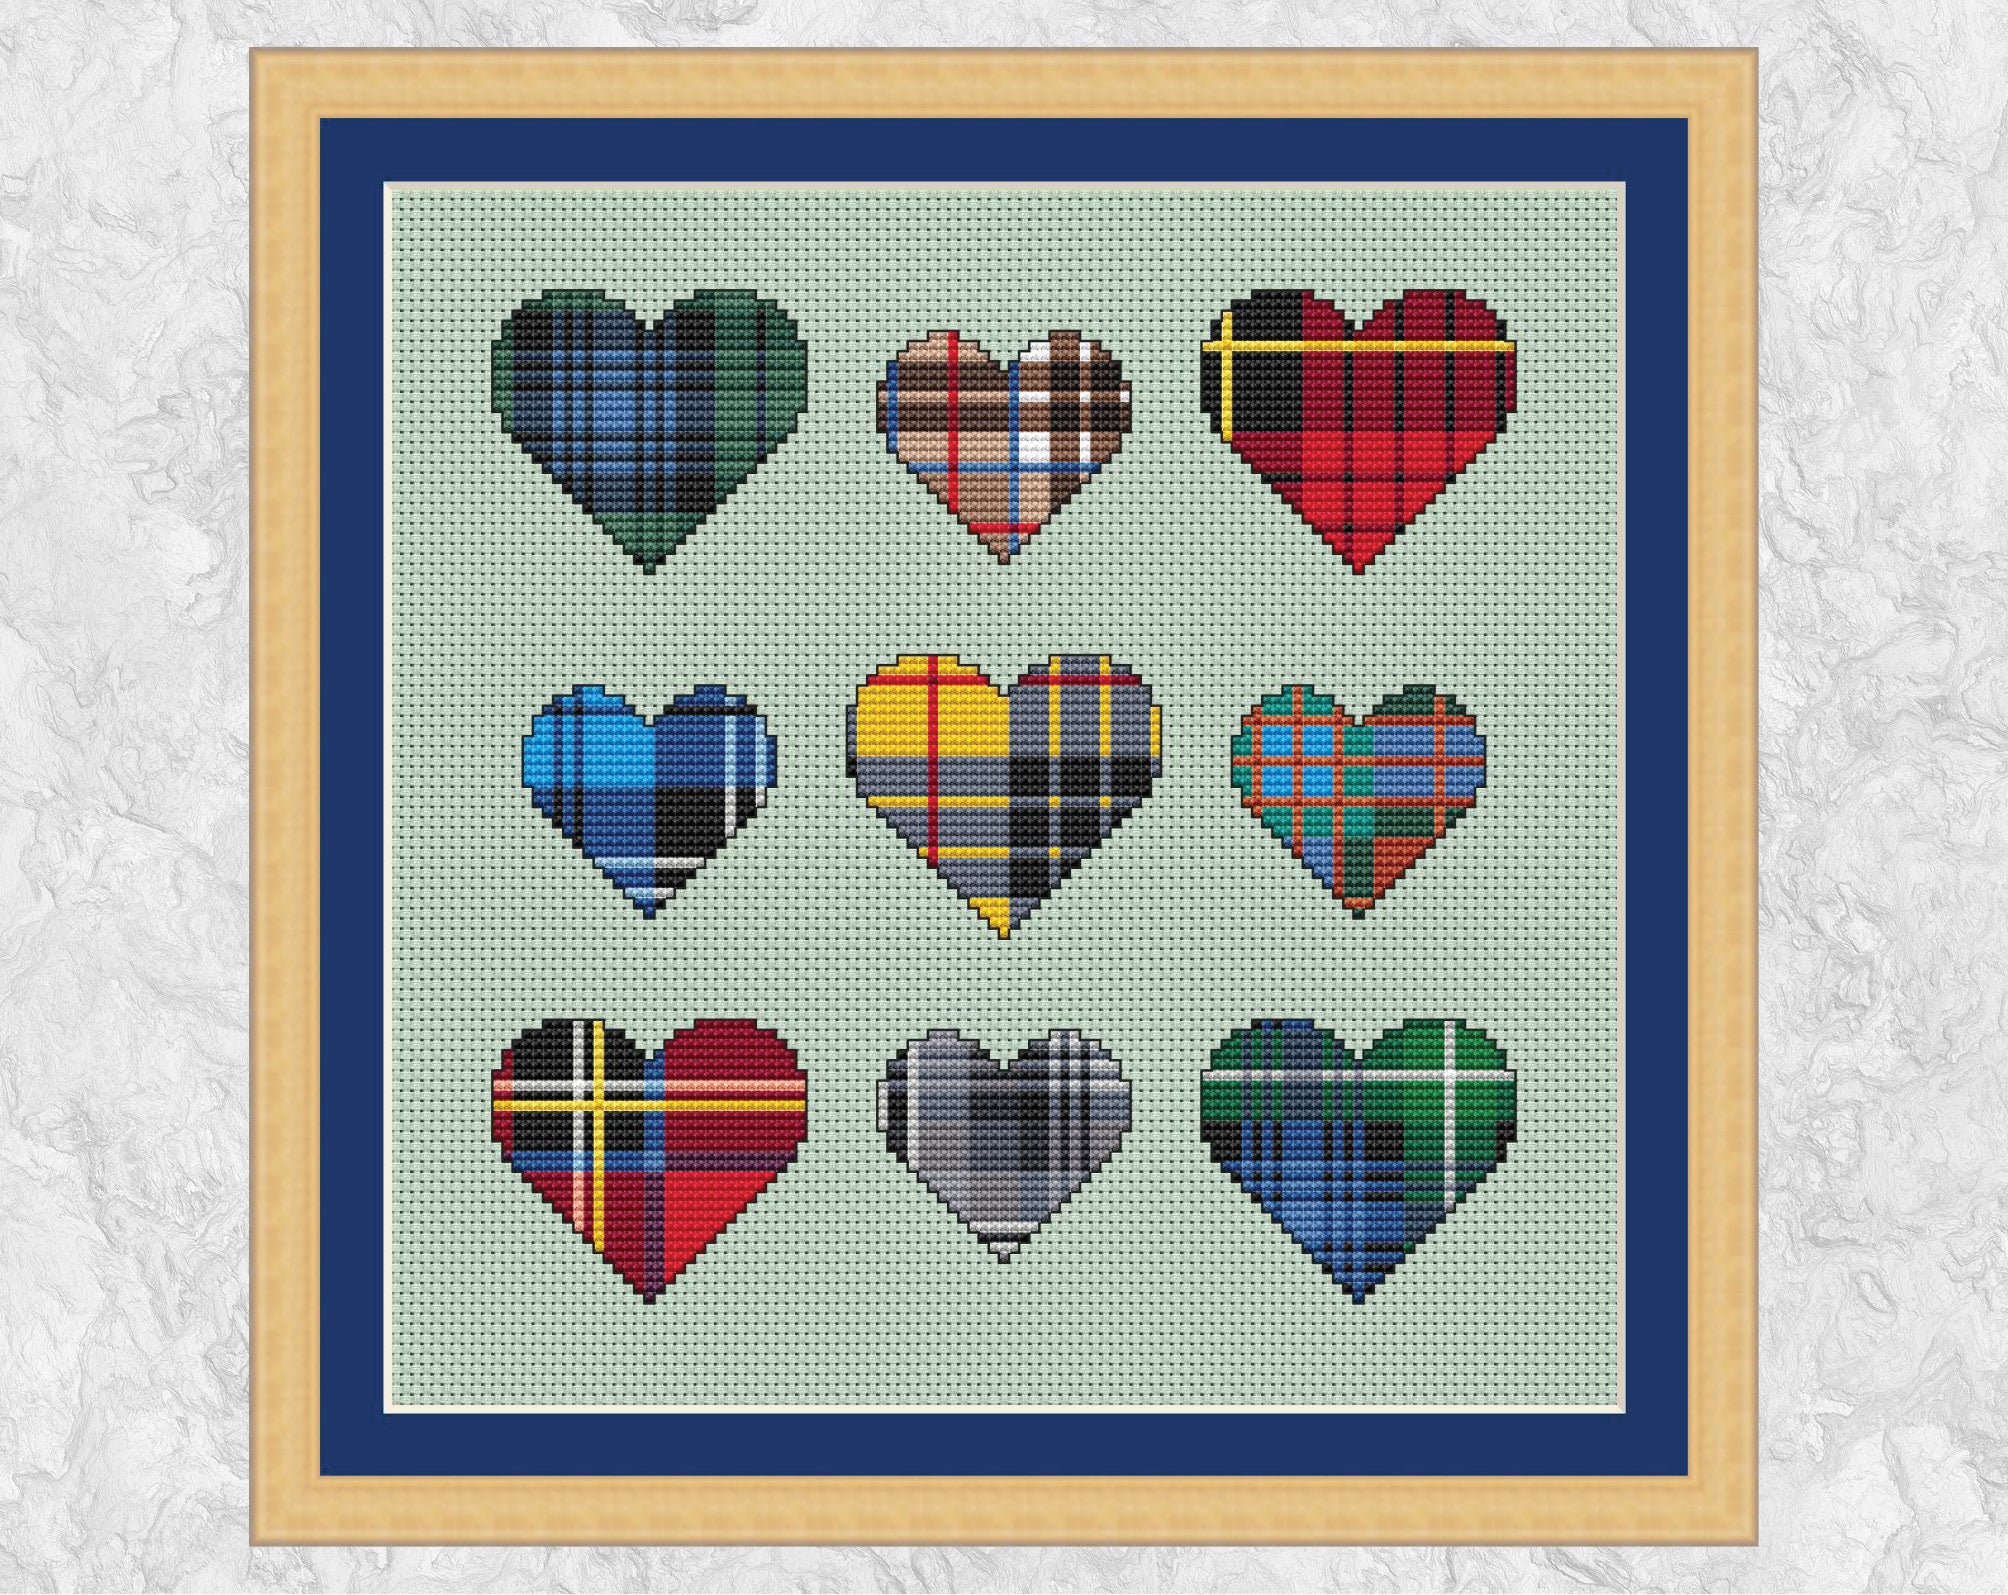 Nine Tartan Hearts cross stitch pattern. Mini hearts filled with different Scottish tartan patterns. Shown with frame.